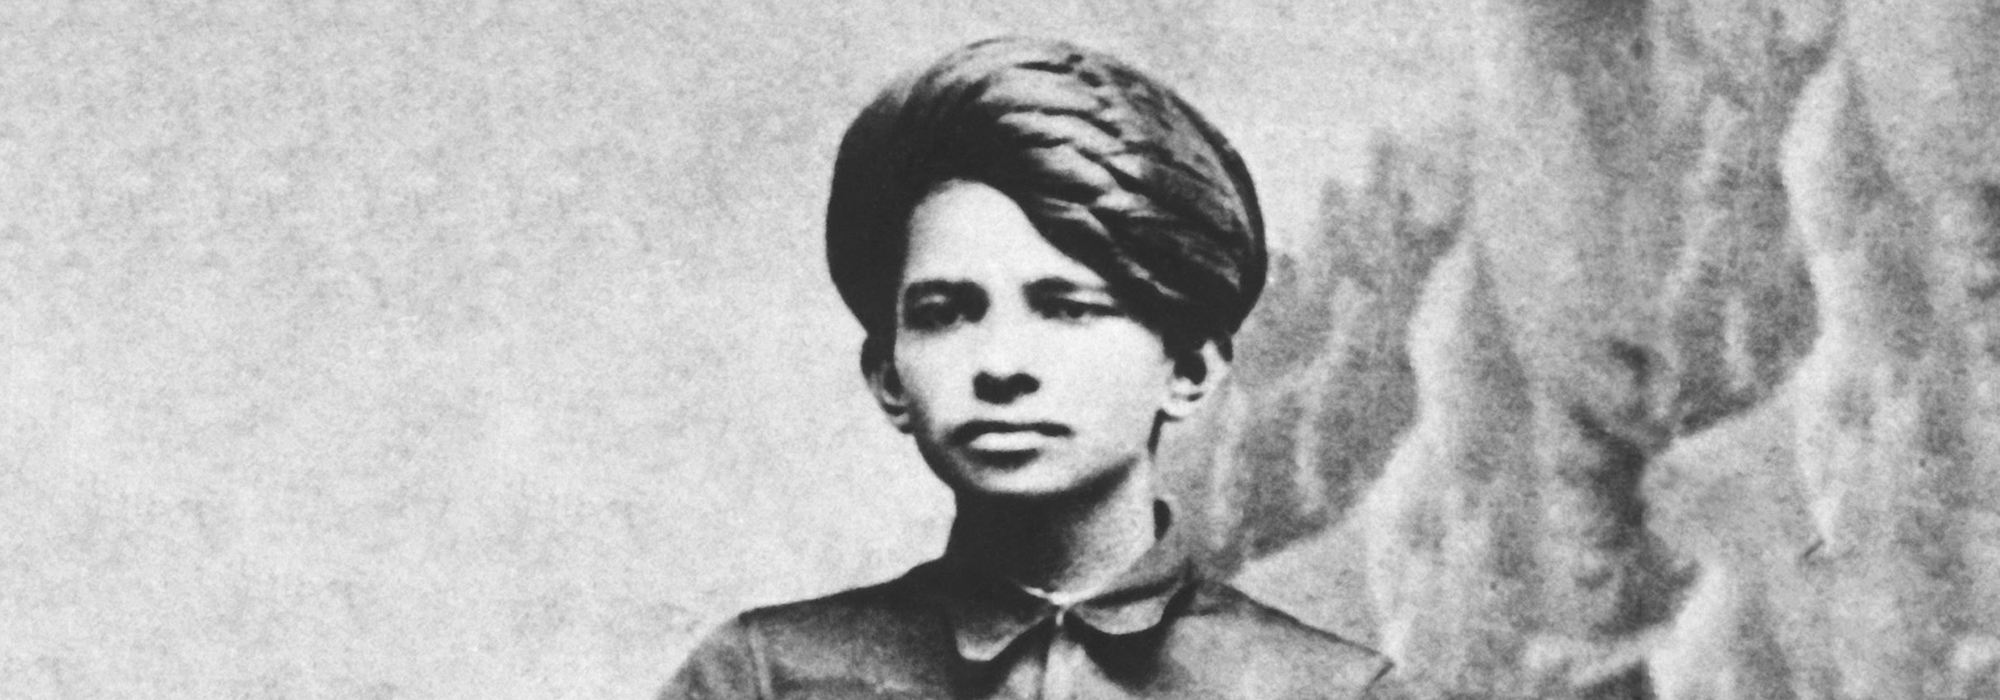 Gandhi at age 17, Rajkot, Gujarat